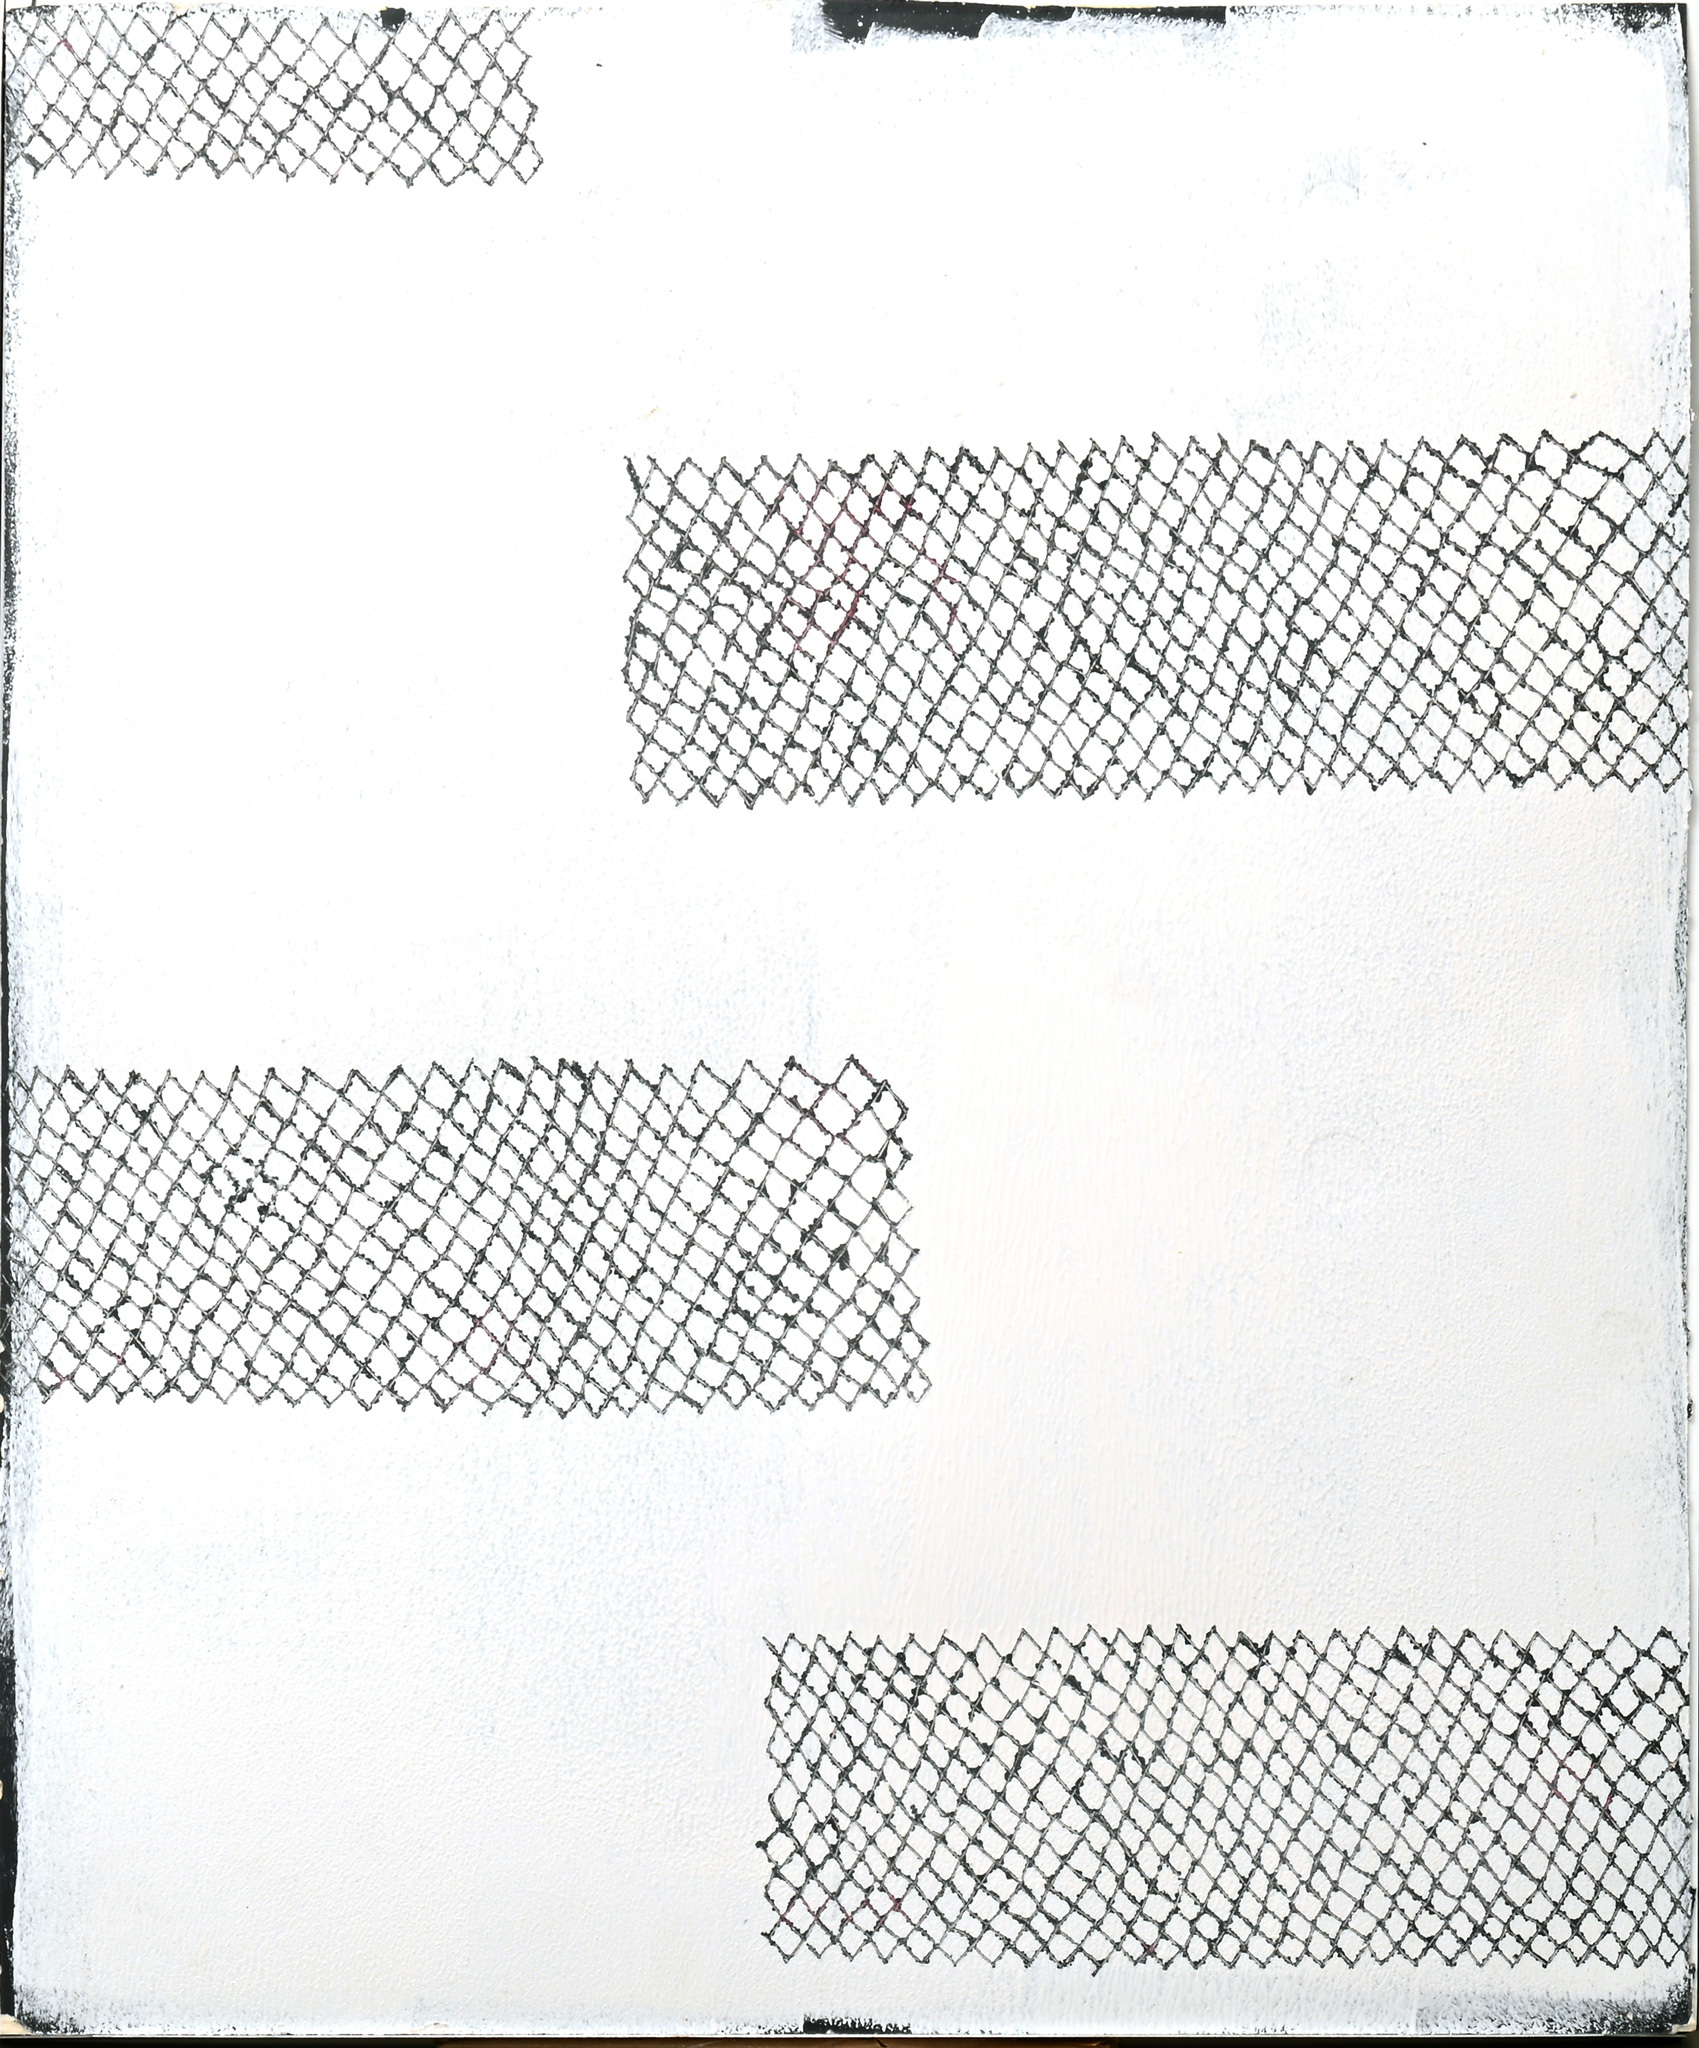 Maschendrahtzaun, 2023, latex on tetra pack, motif: 60x50 cm / frame: 61,5x51,5 cm